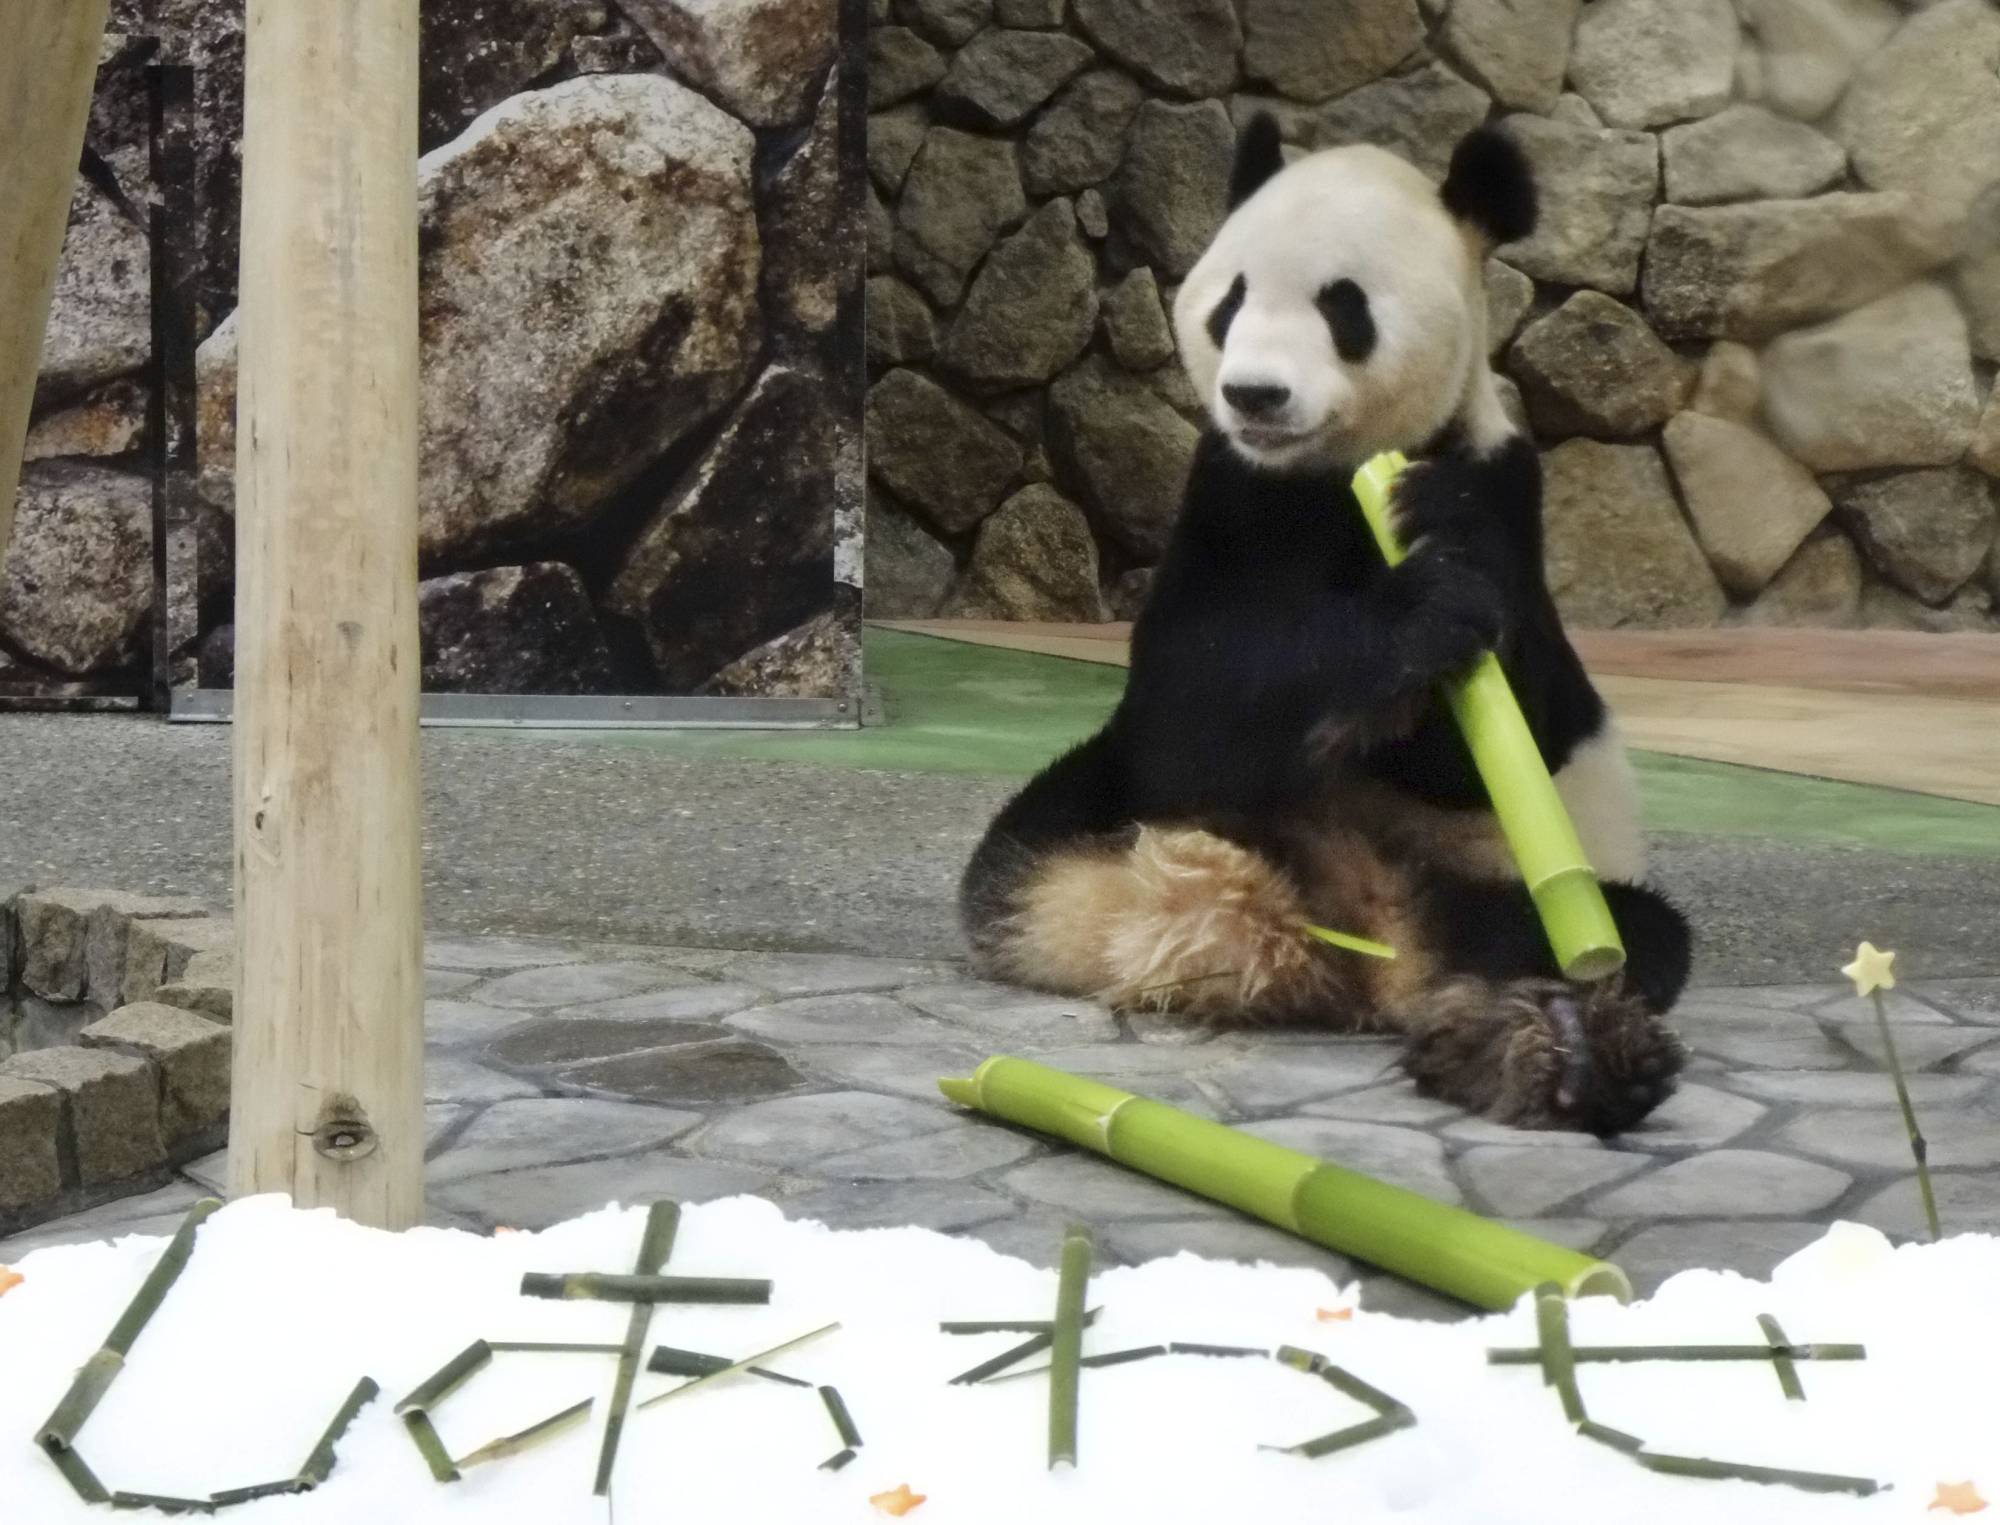 Wakayama theme park gives panda couple bamboo for Star Festival ...